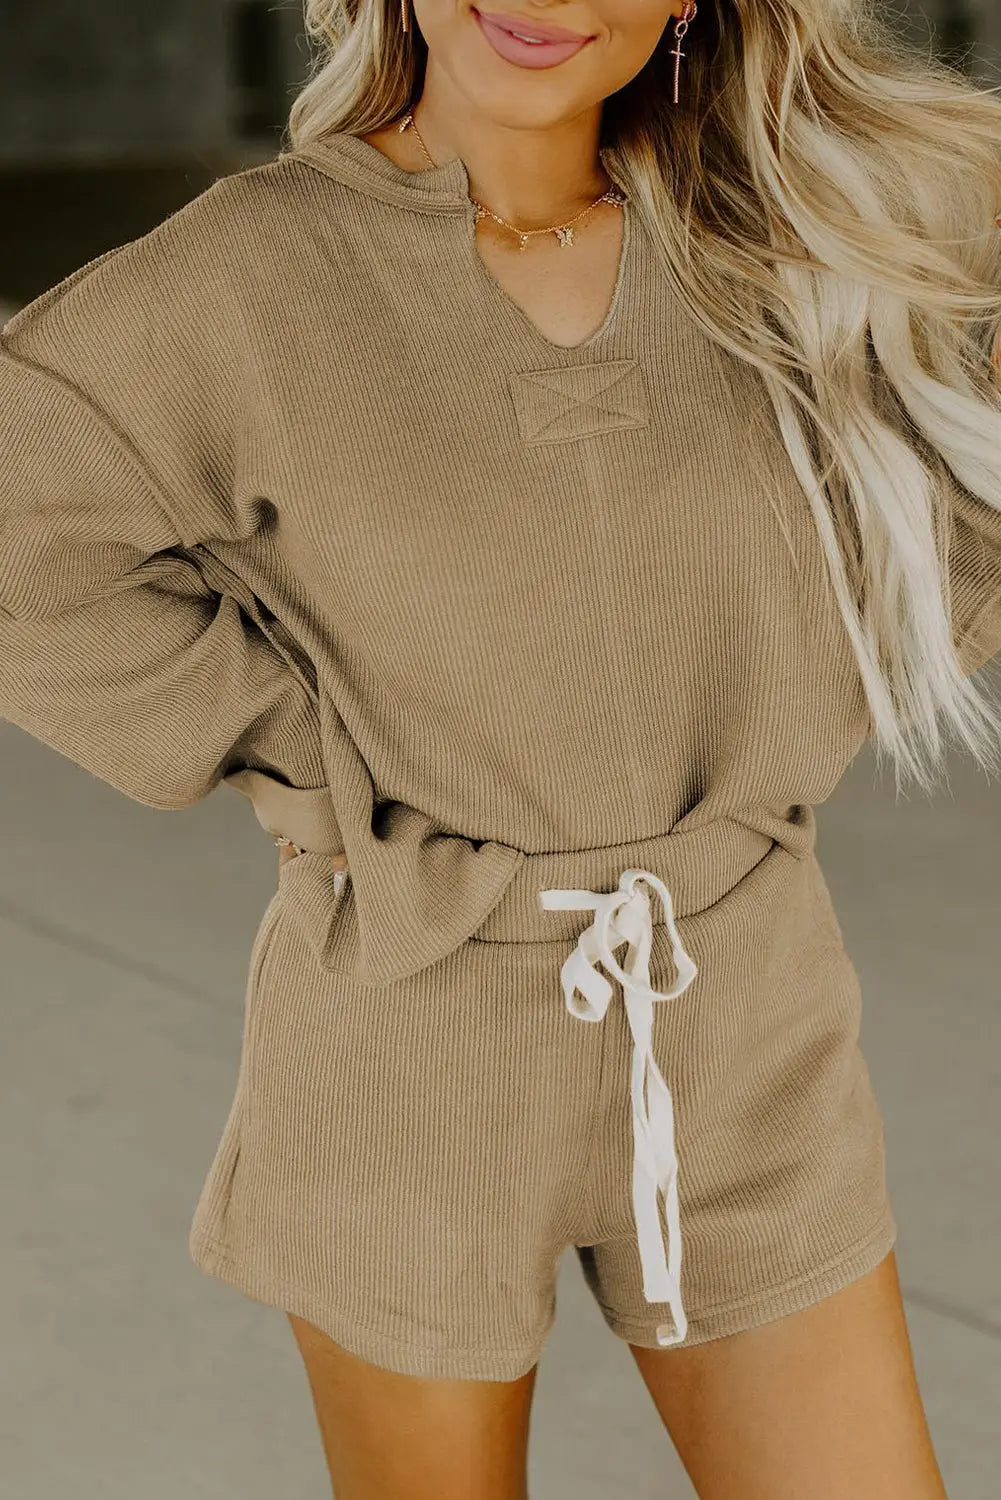 Khaki exposed seam textured long sleeve top shorts set - apricot khaki / s / 60% cotton + 35% polyester + 5% elastane